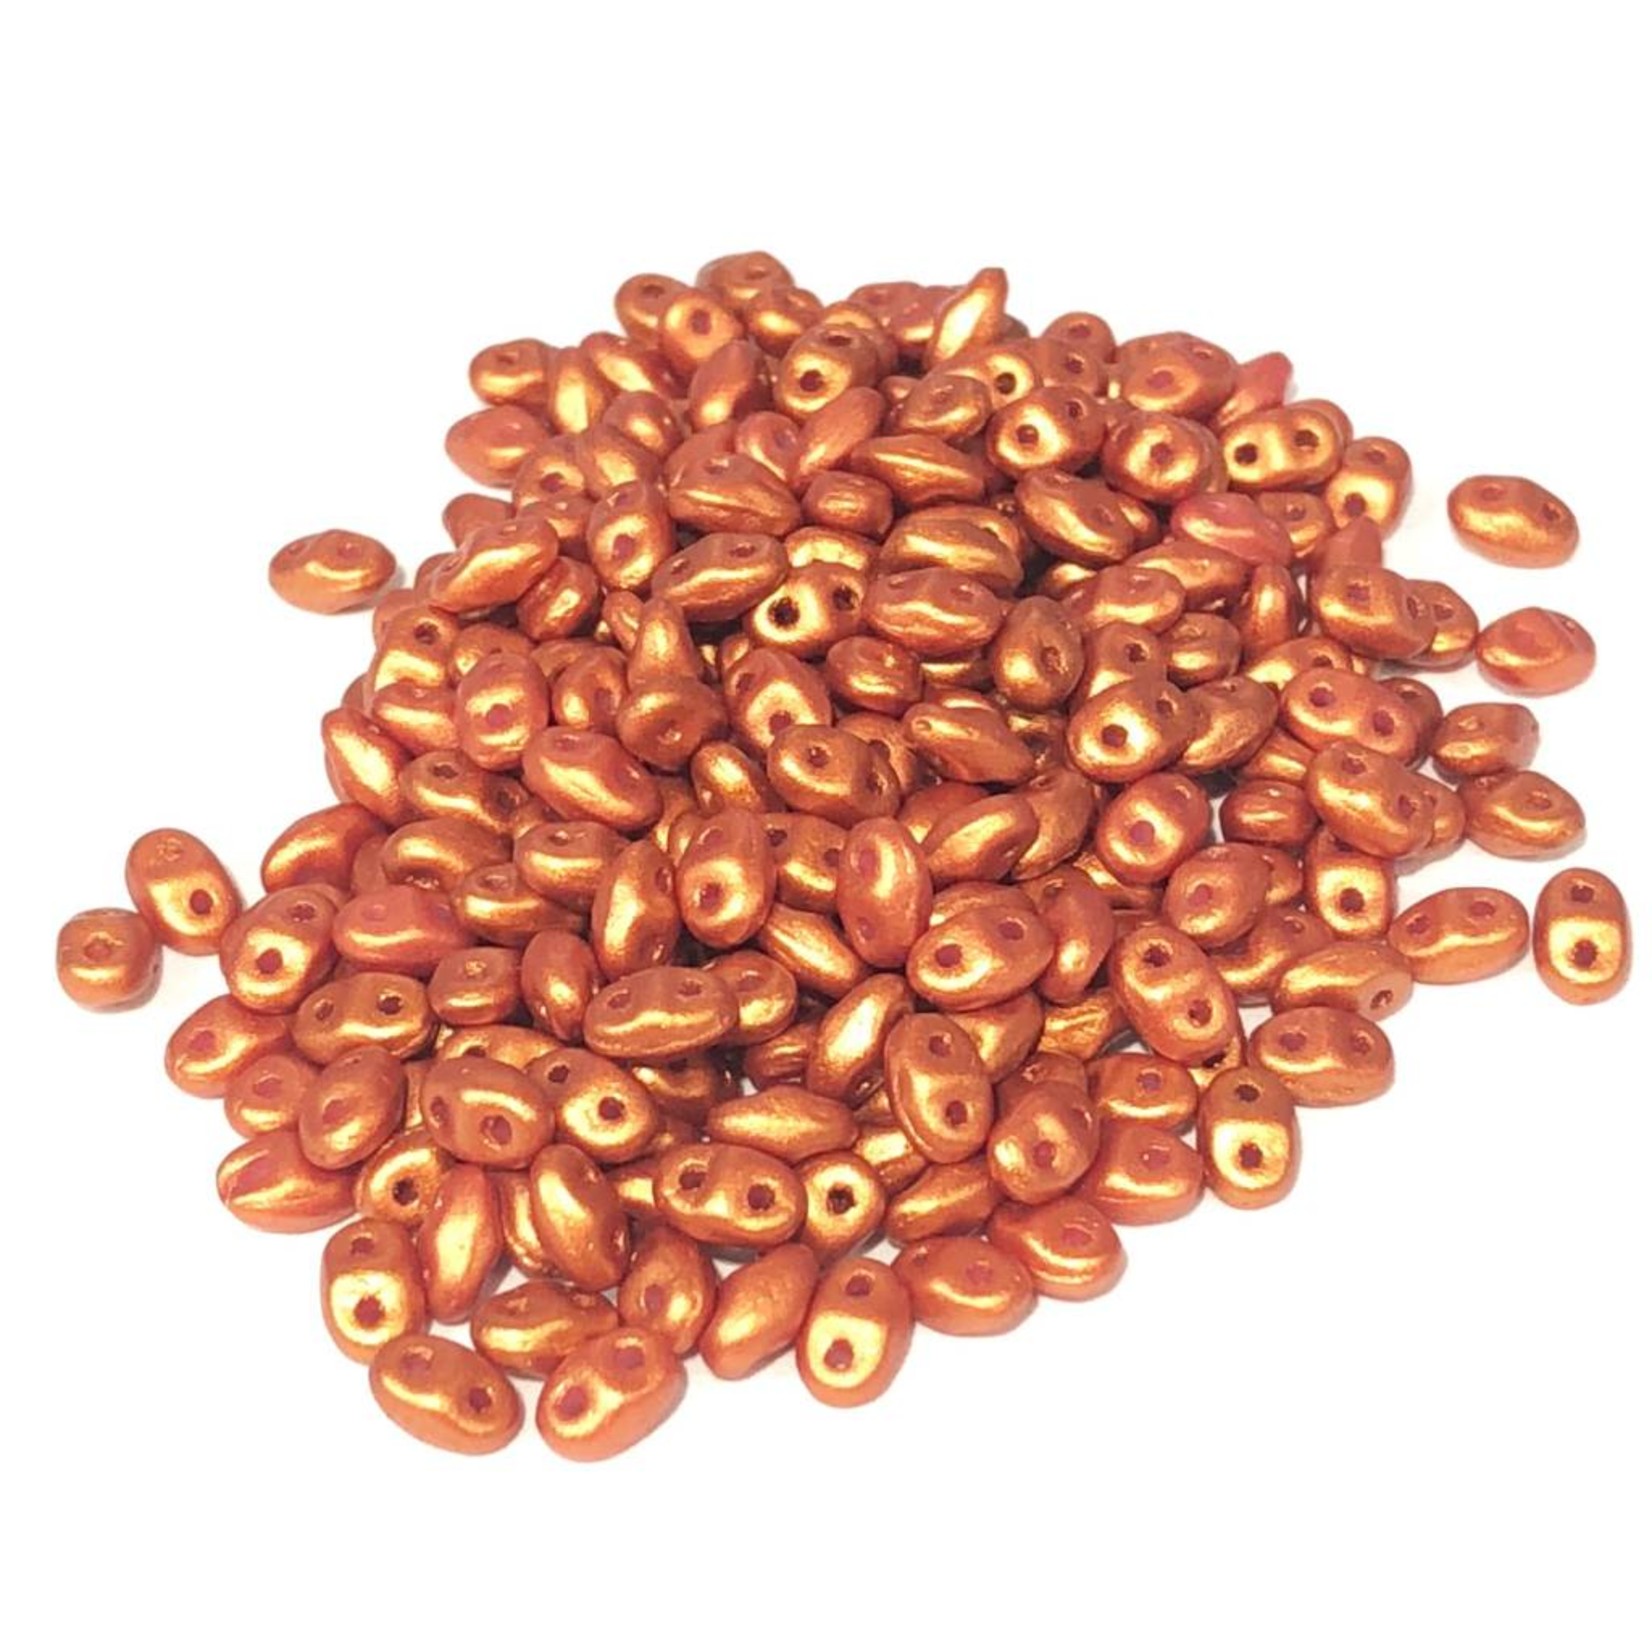 MiniDuo Gold Shine - Burnt Orange 15g Tube